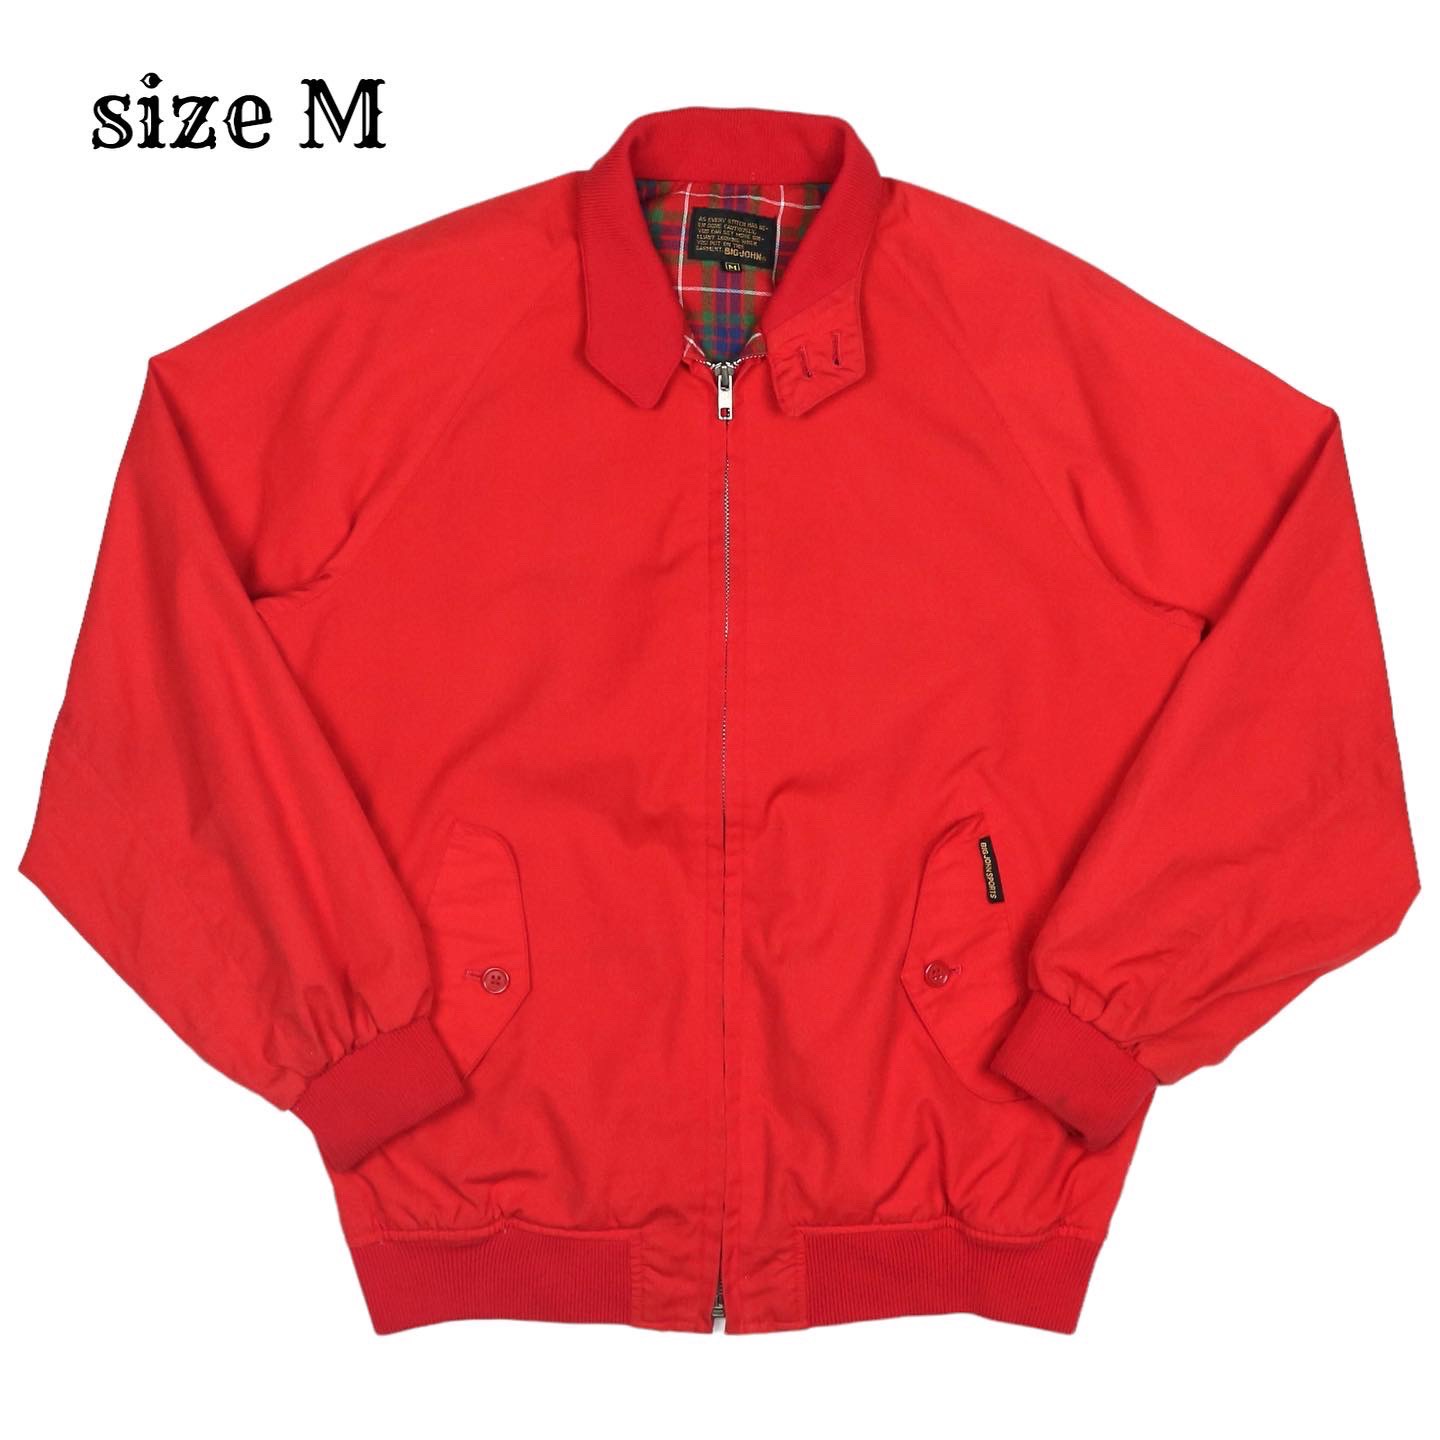 Big John Harrington Jacket Size M